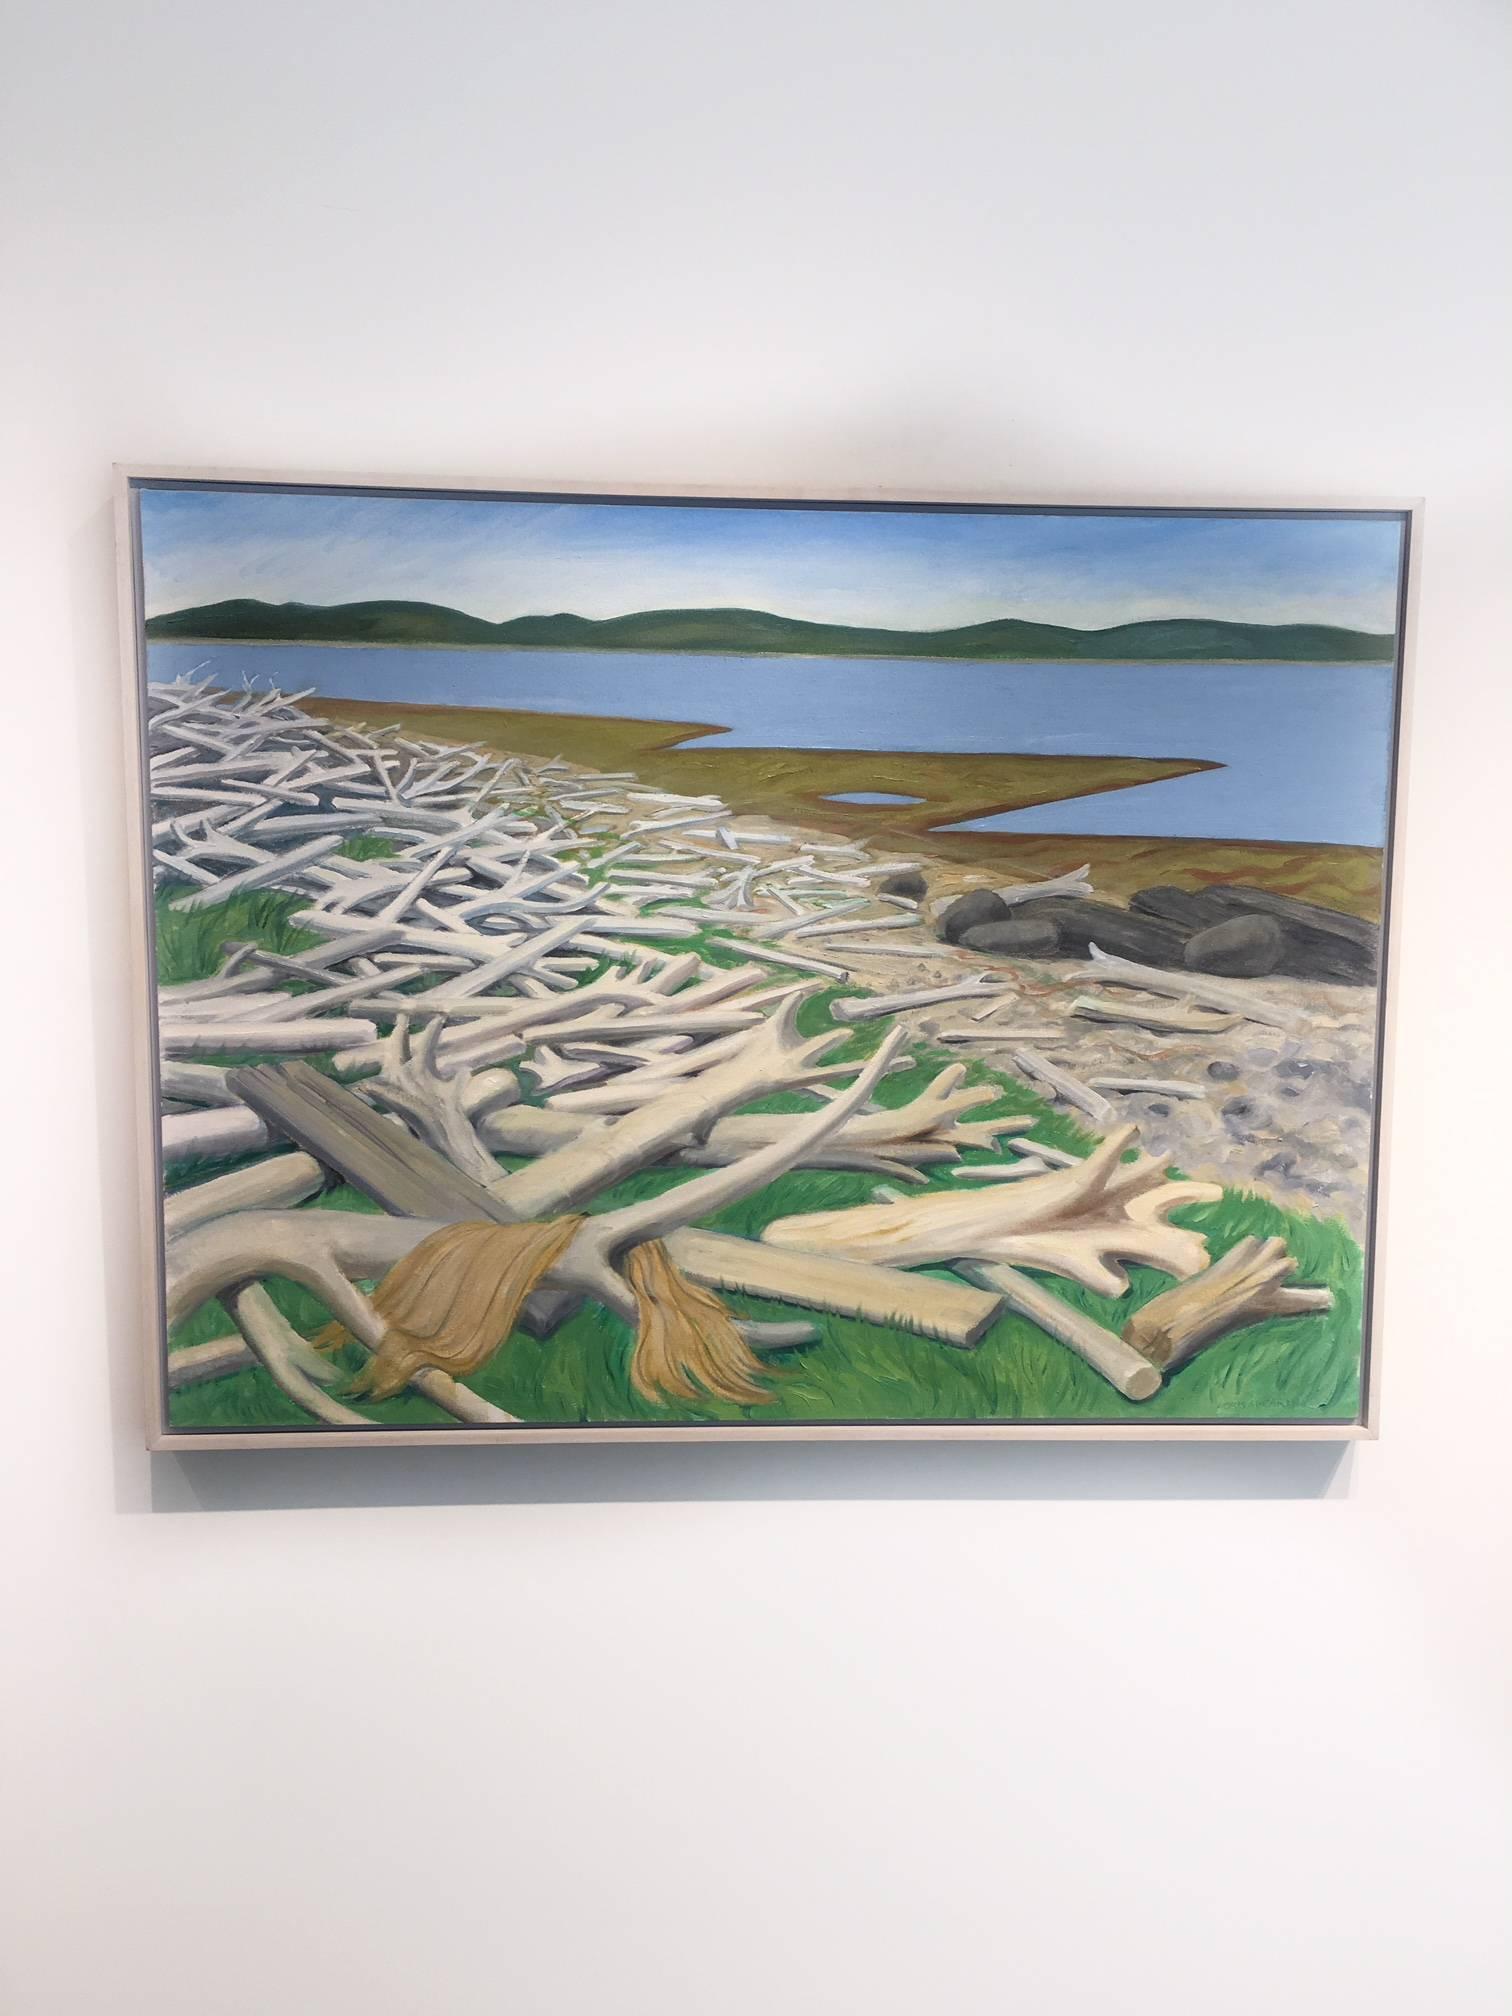 Driftwood Beach at Port au Choix Newfoundland, landscape oil painting on canvas - Gray Landscape Painting by Doris McCarthy